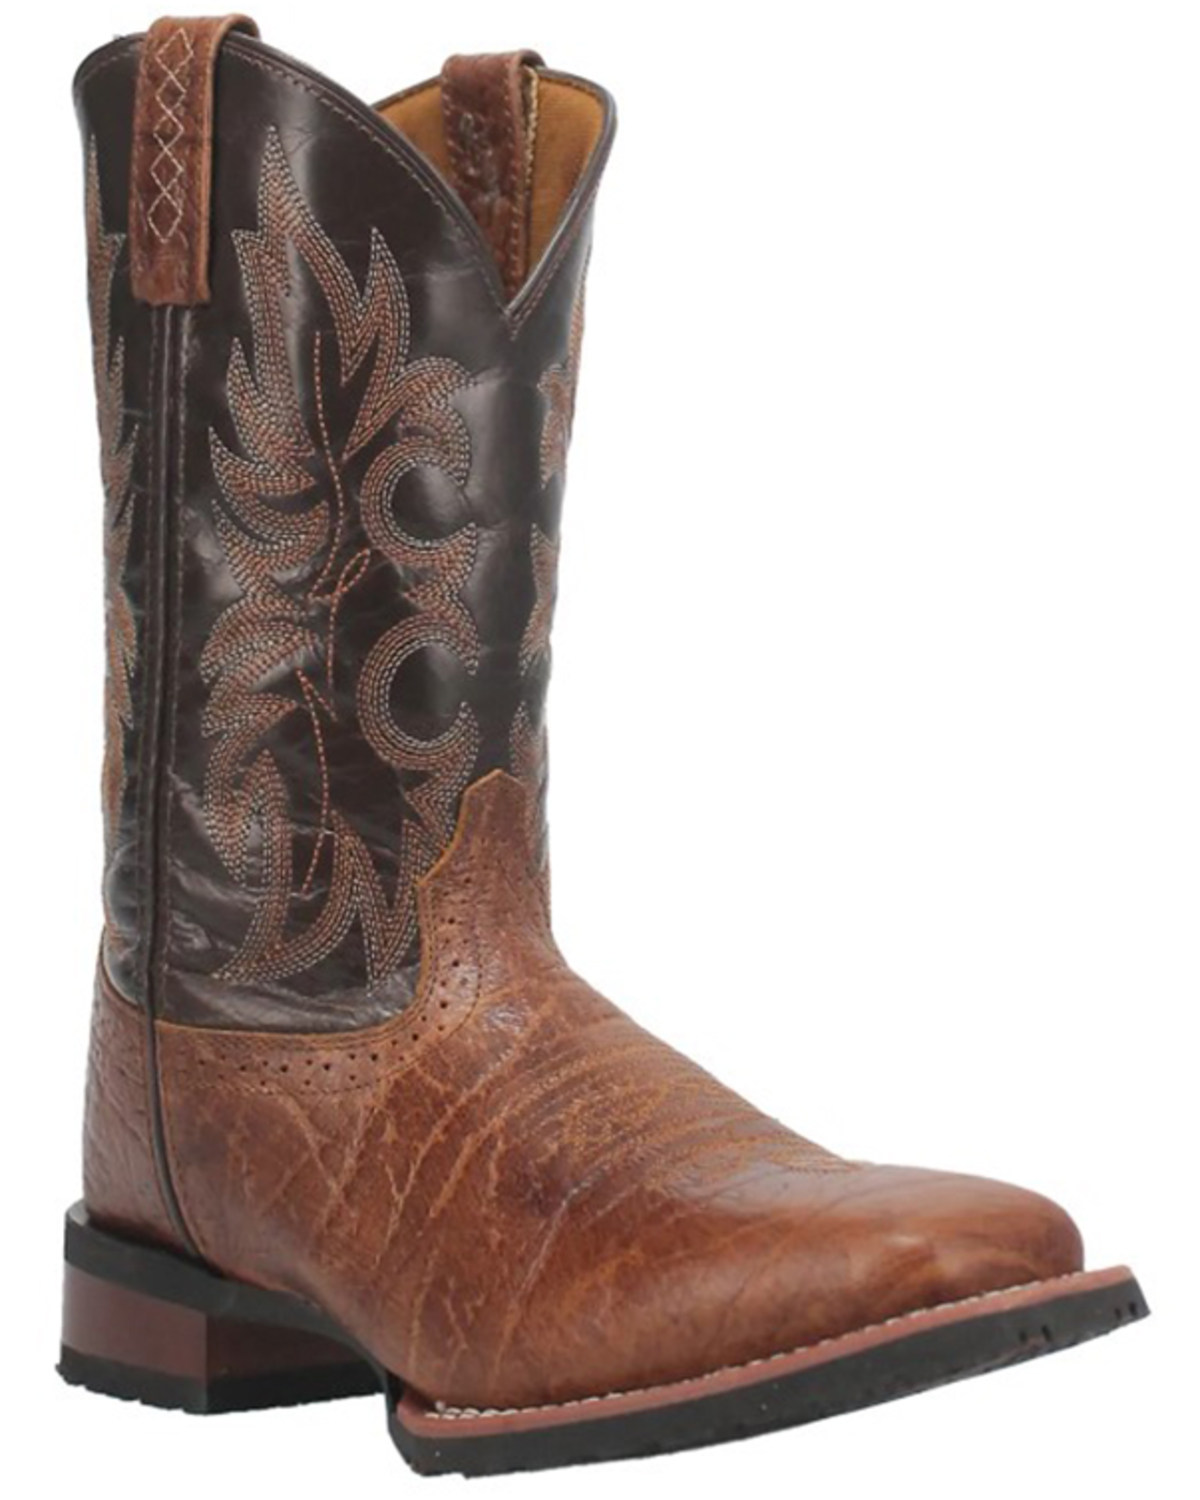 Laredo Men's Broken Bow Western Performance Boots - Broad Square Toe